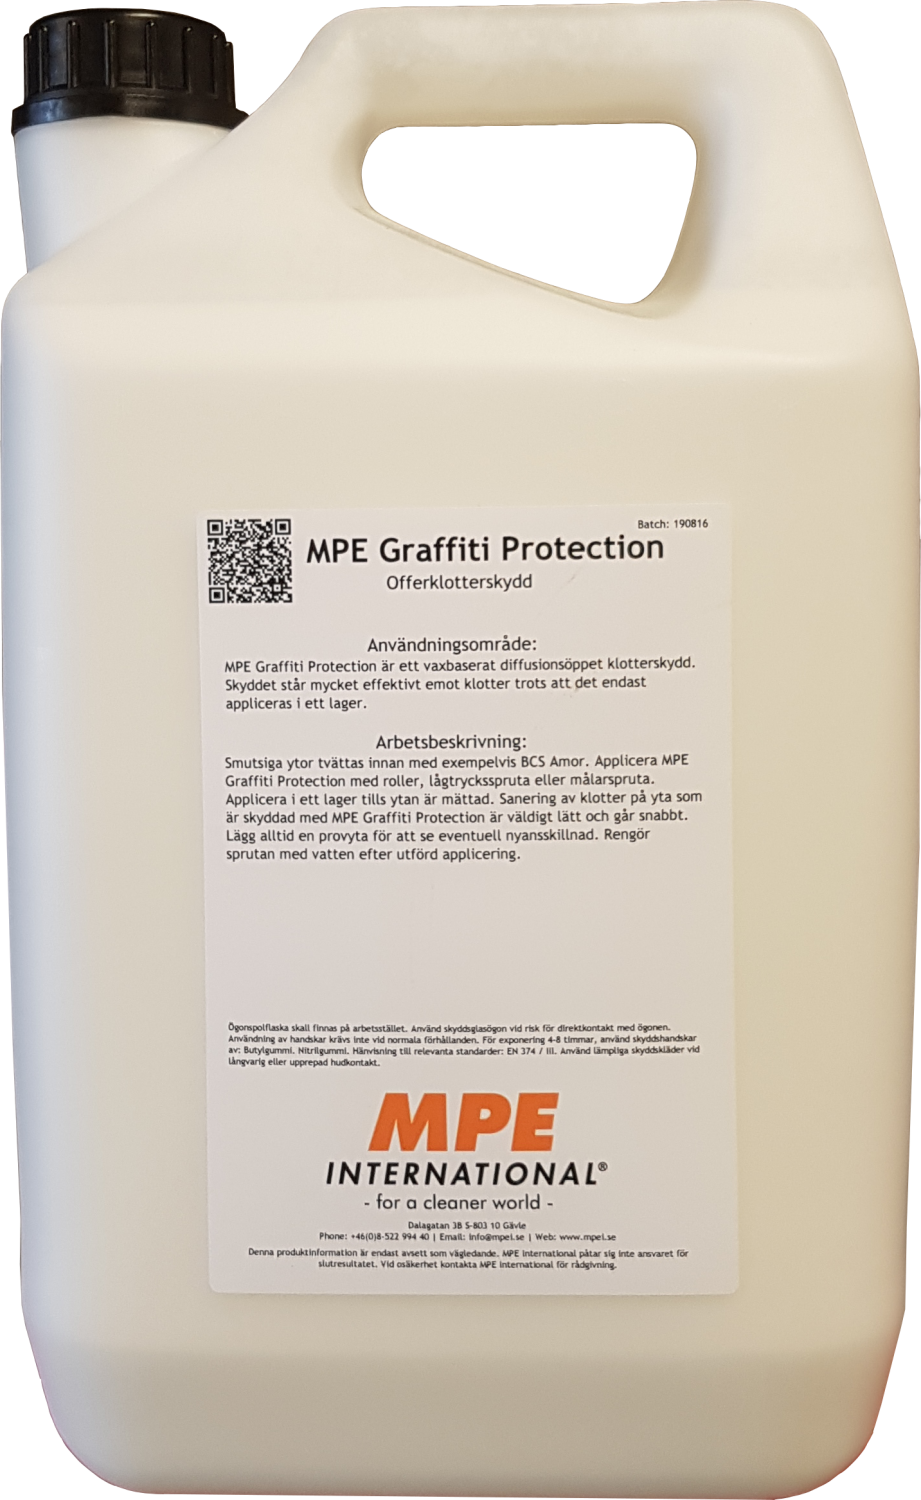 MPE Graffiti Protection